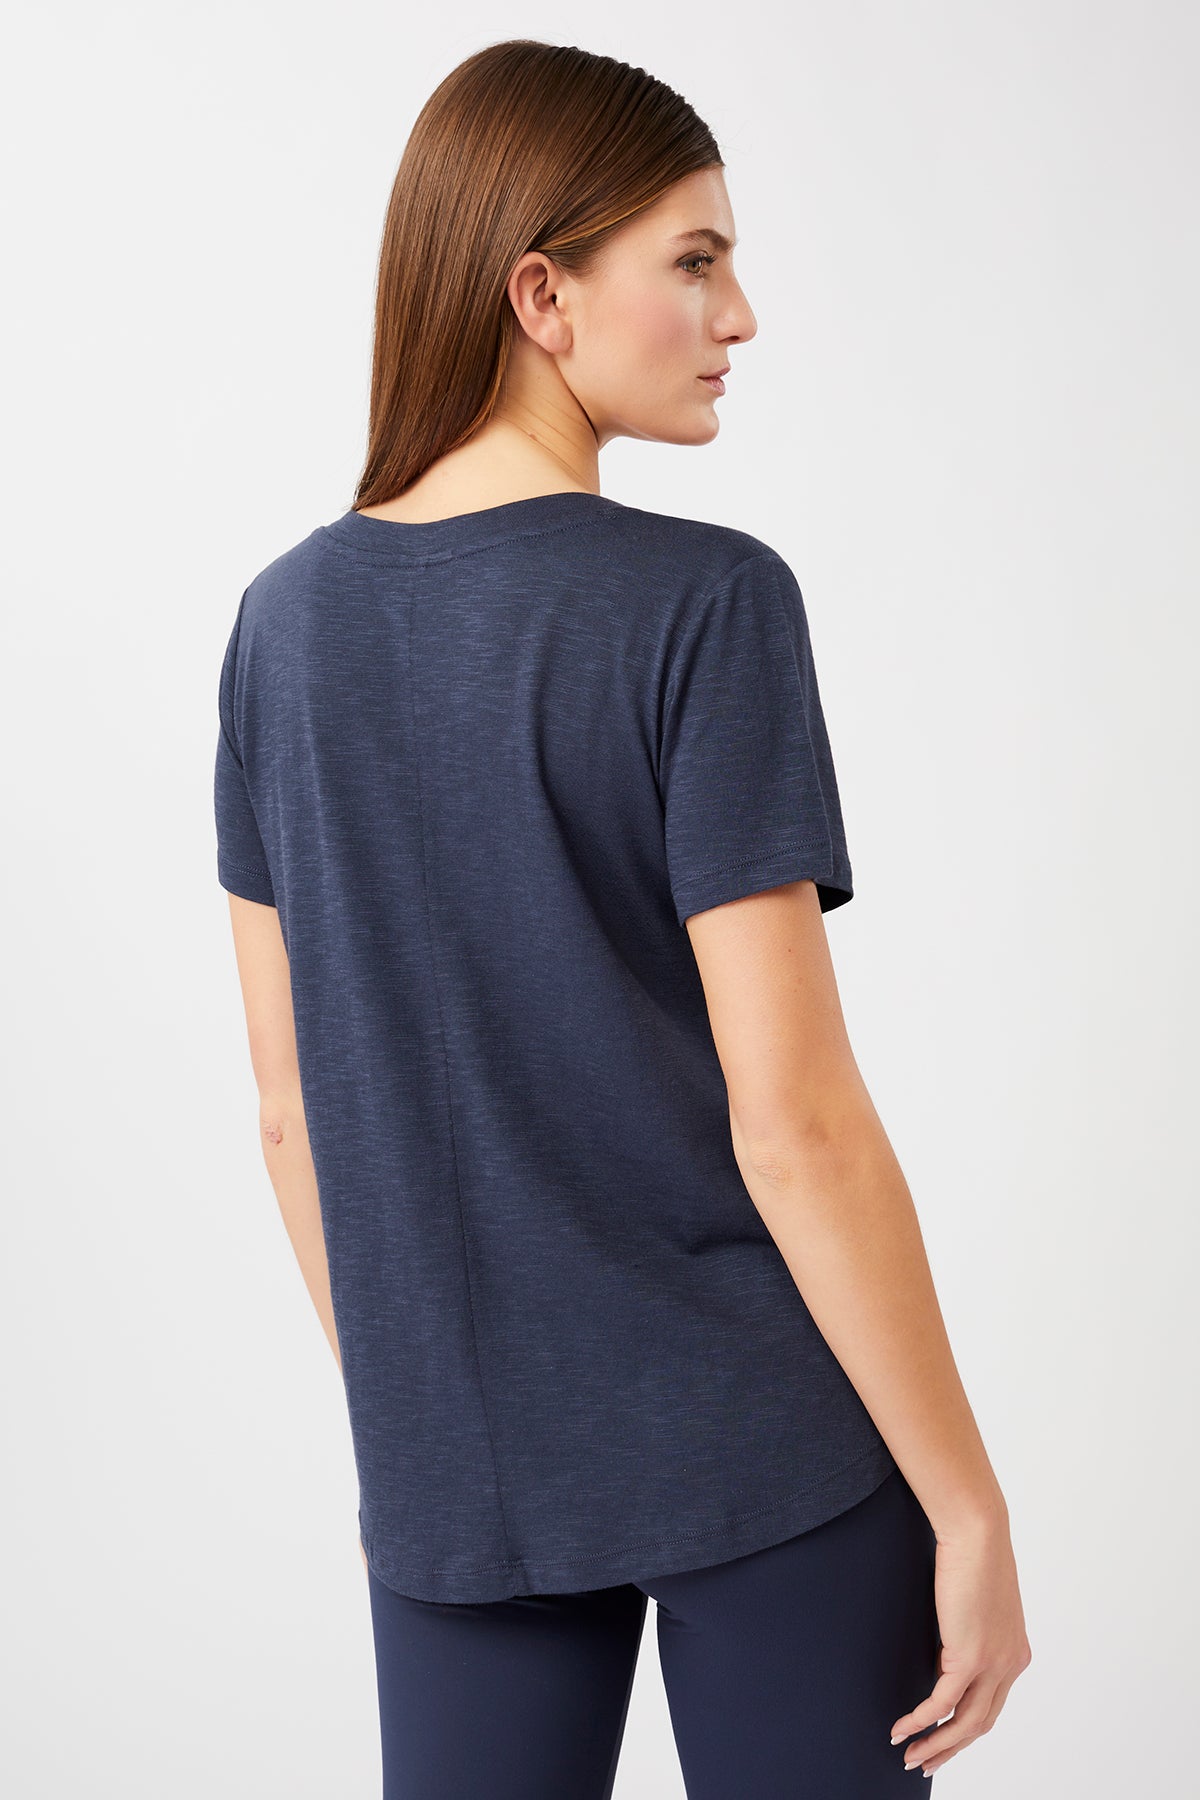 Mandala Yoga Shirt Blau Rückseite - The New V-Neck